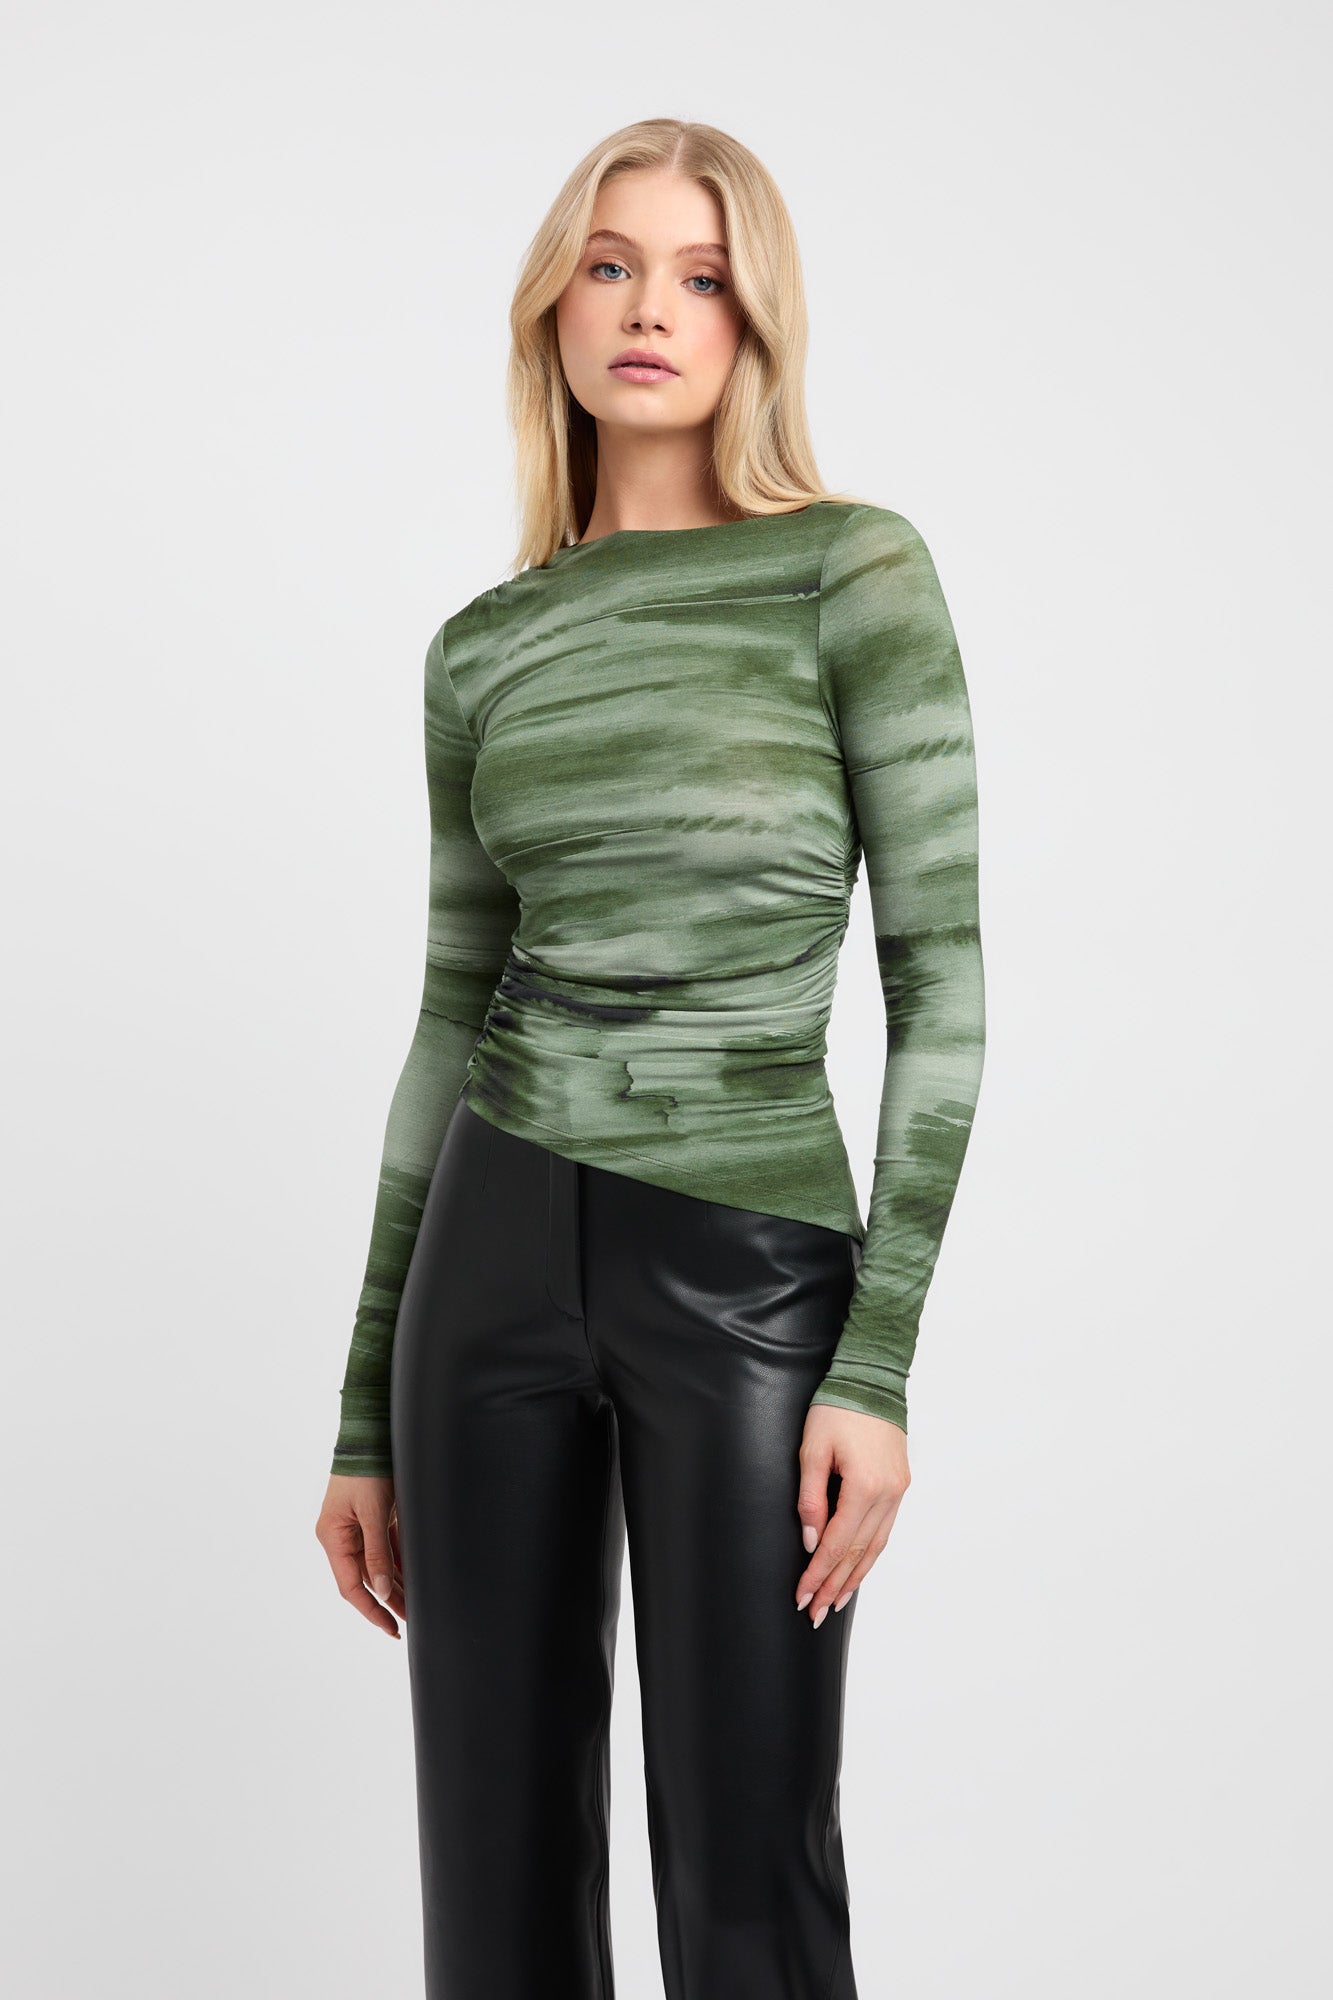 Kookai Olive Long Sleeve Top Womens Size AU 8 Green Shiny Collared